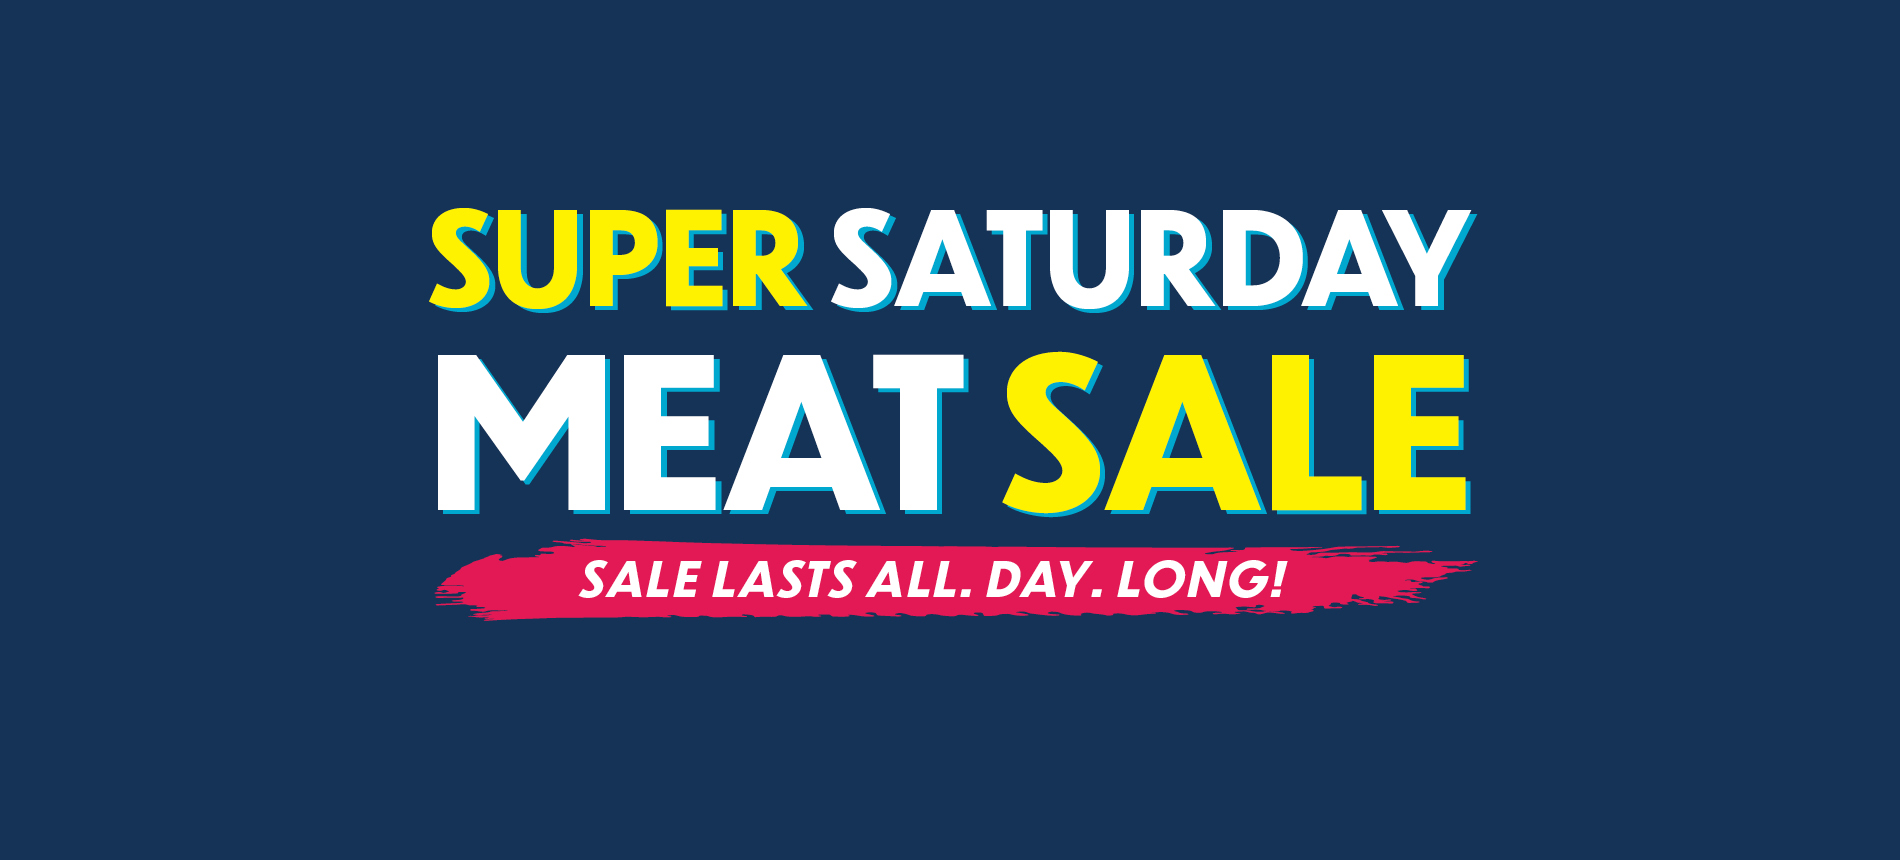 Super Saturday Meat Sale - This Saturday